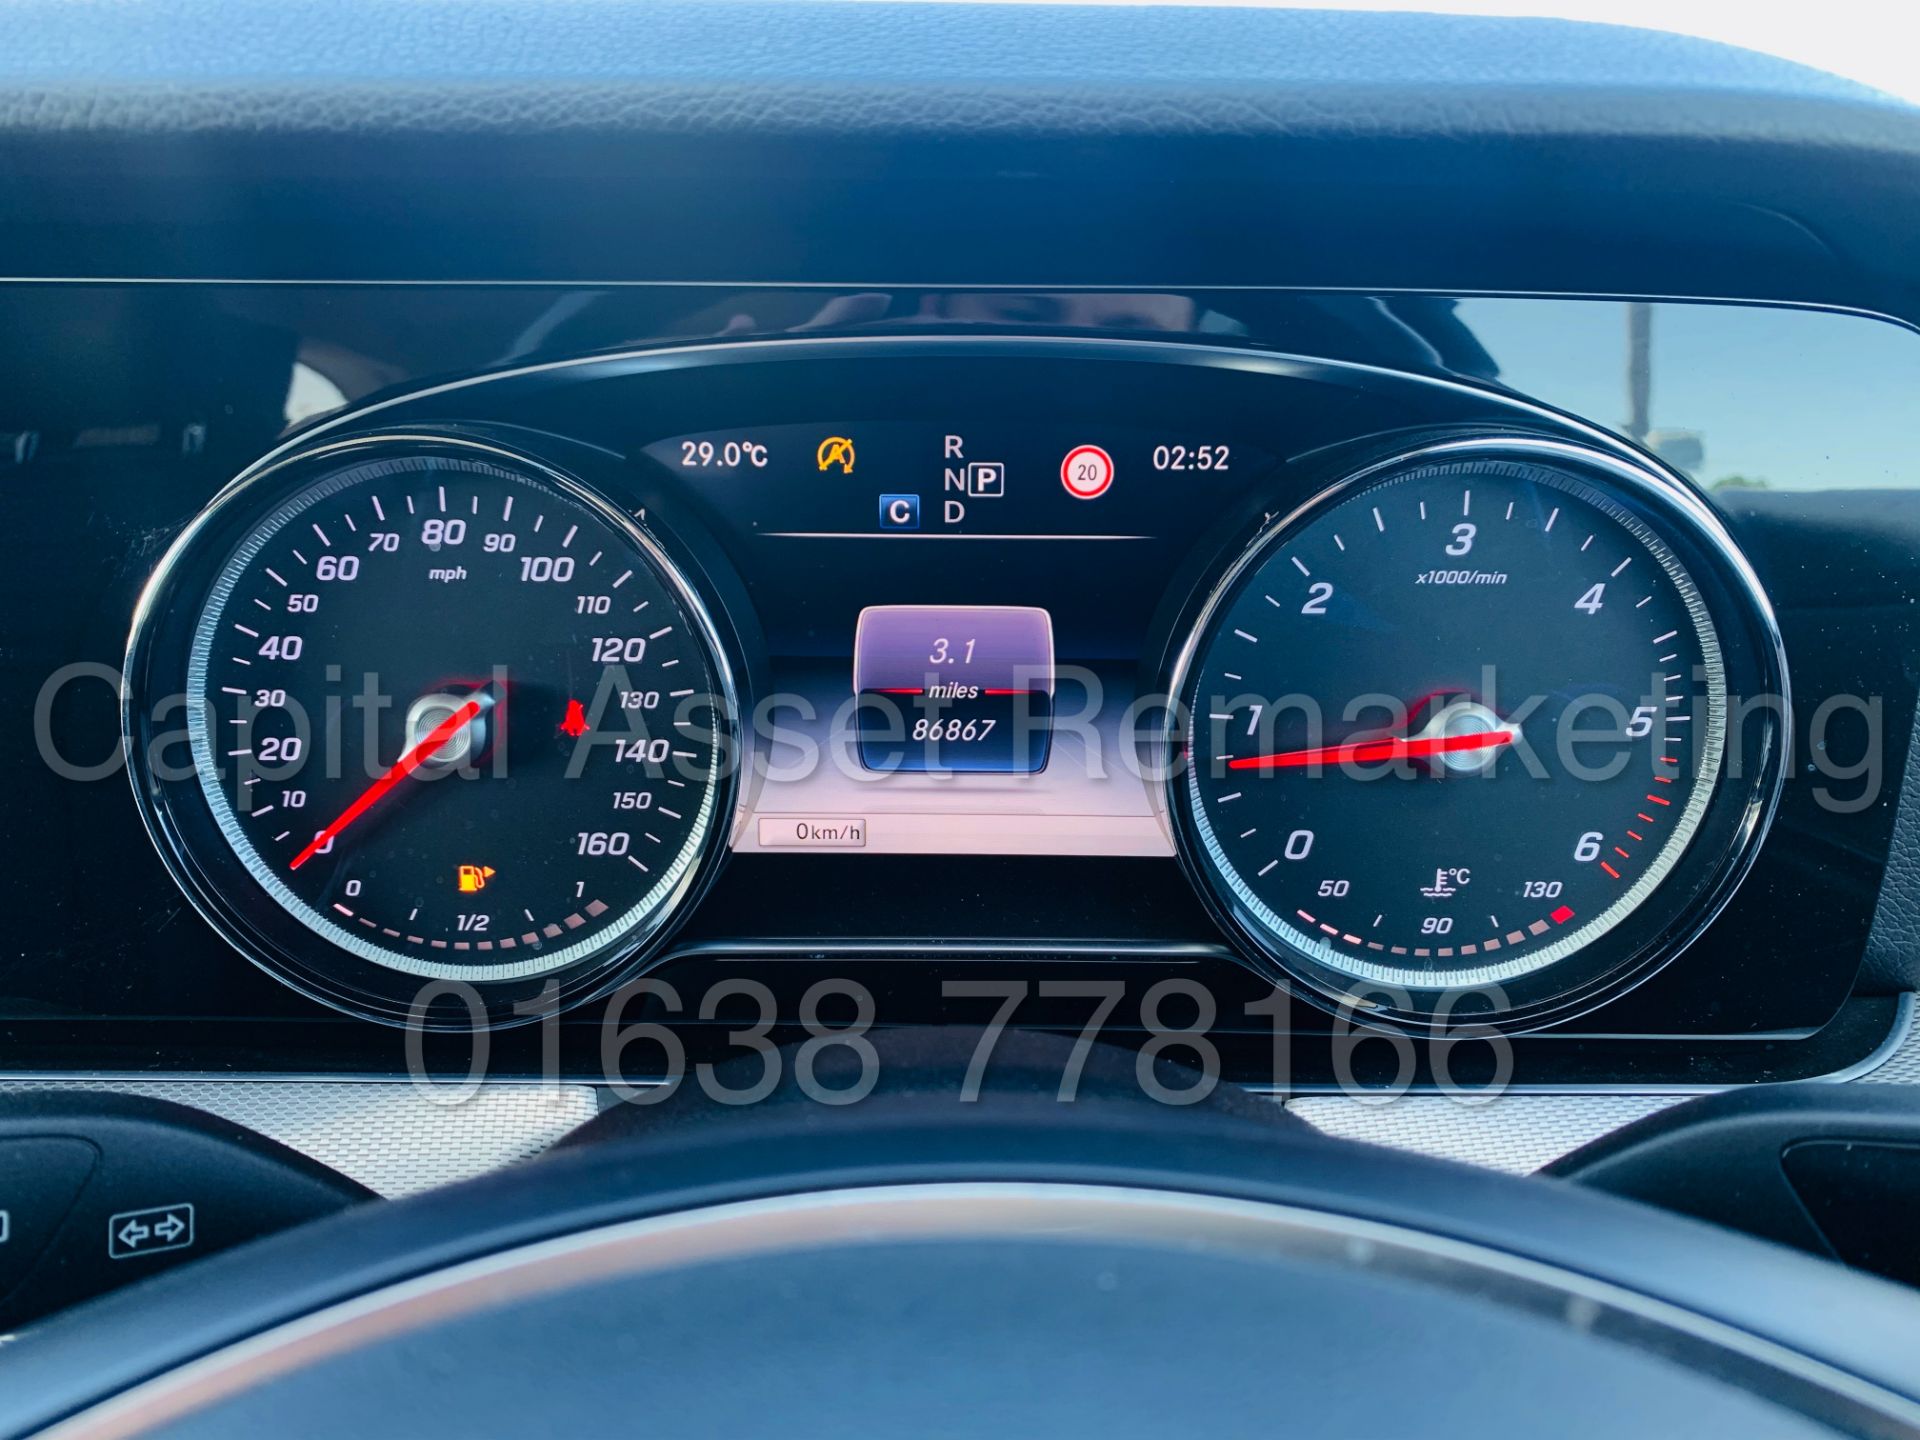 (On Sale) MERCEDES-BENZ E220D *5 DOOR - ESTATE CAR* (2017) '9-G TRONIC AUTO - LEATHER - SAT NAV' - Image 53 of 53